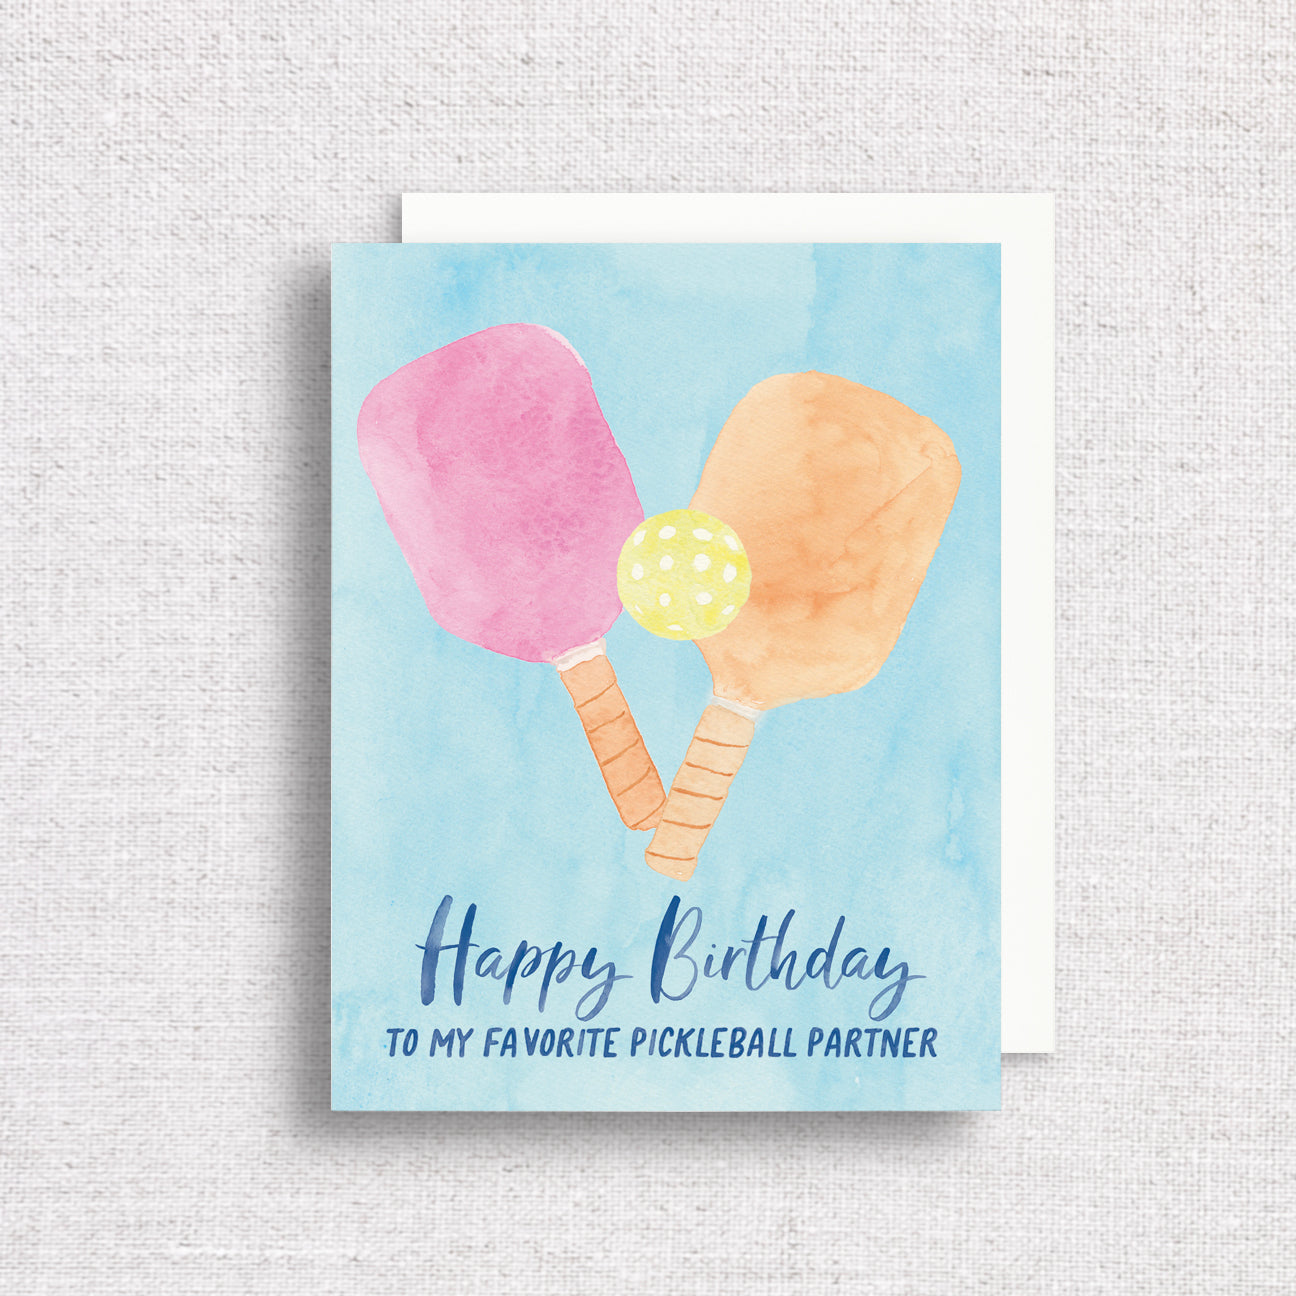 Pickleball Partner Birthday Greeting Card by Gert & Co